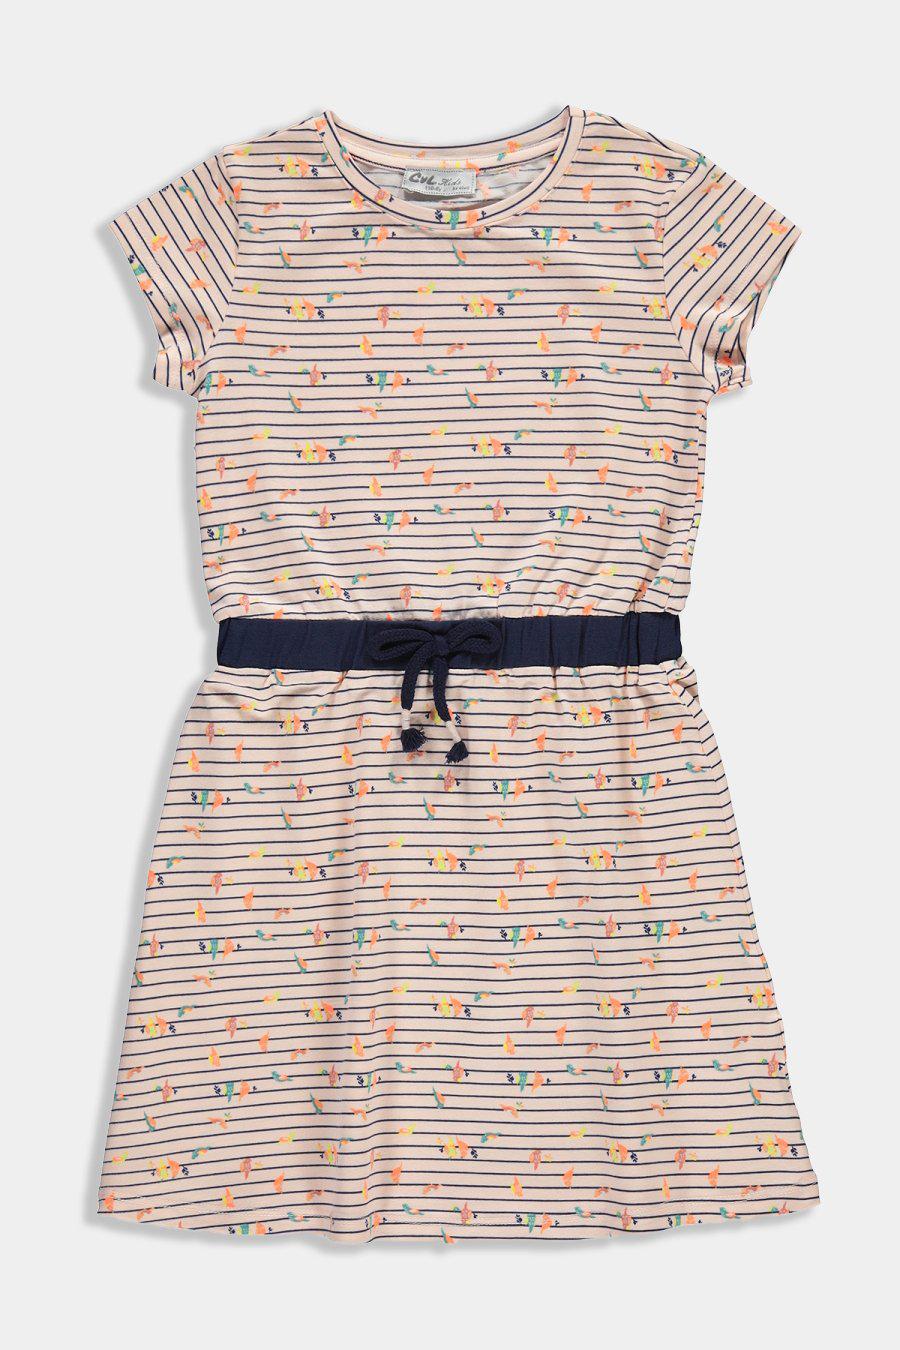 Salmon Tiny Birds Print Drawstring Waist Kids Girl Dress - SinglePrice